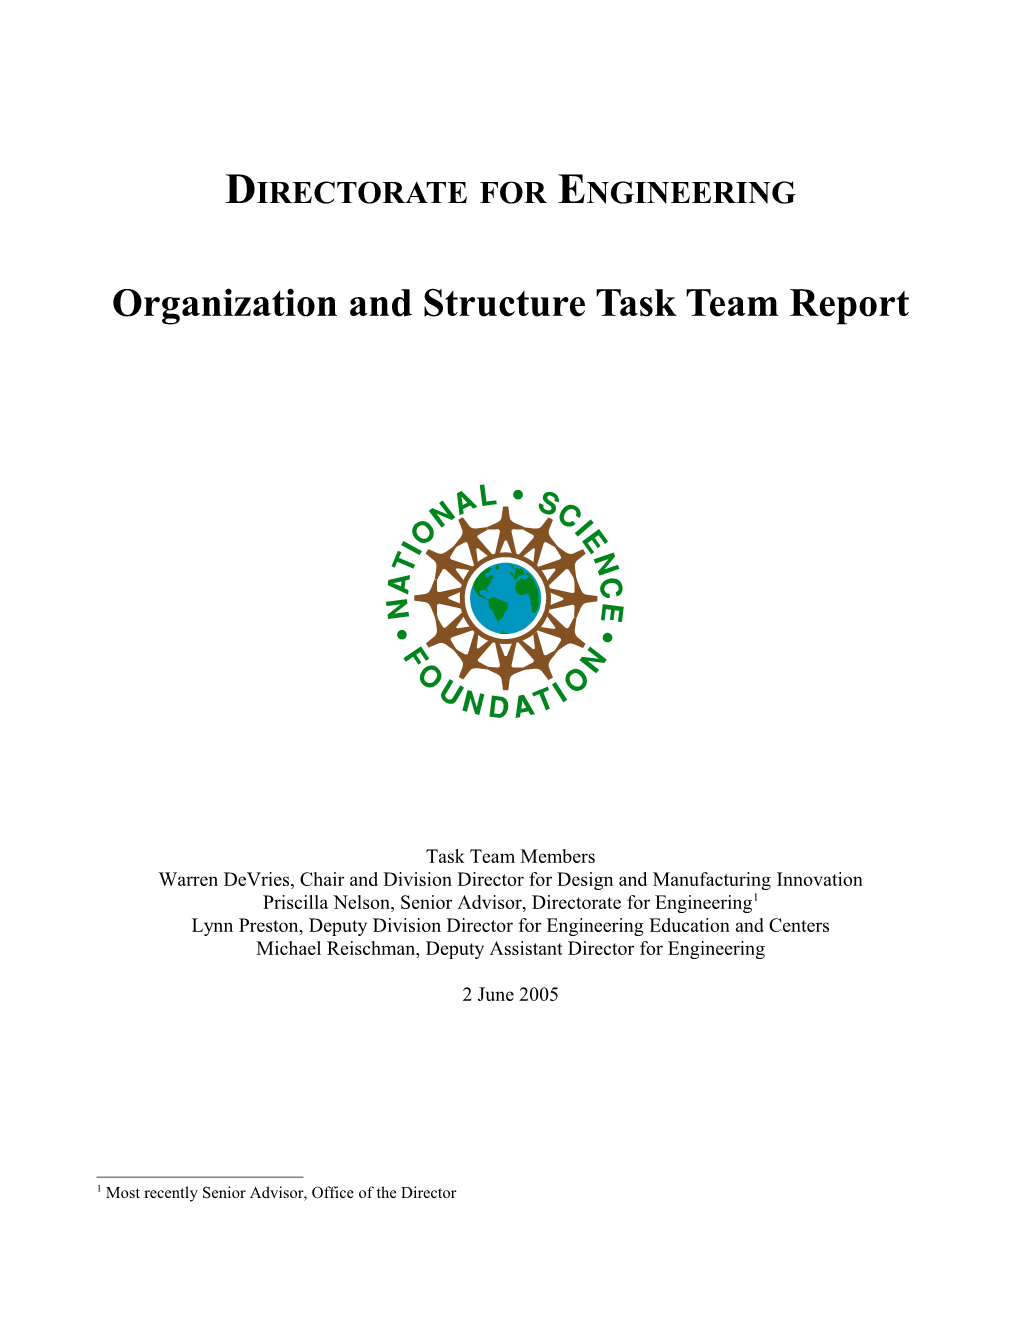 Organization & Structure Report